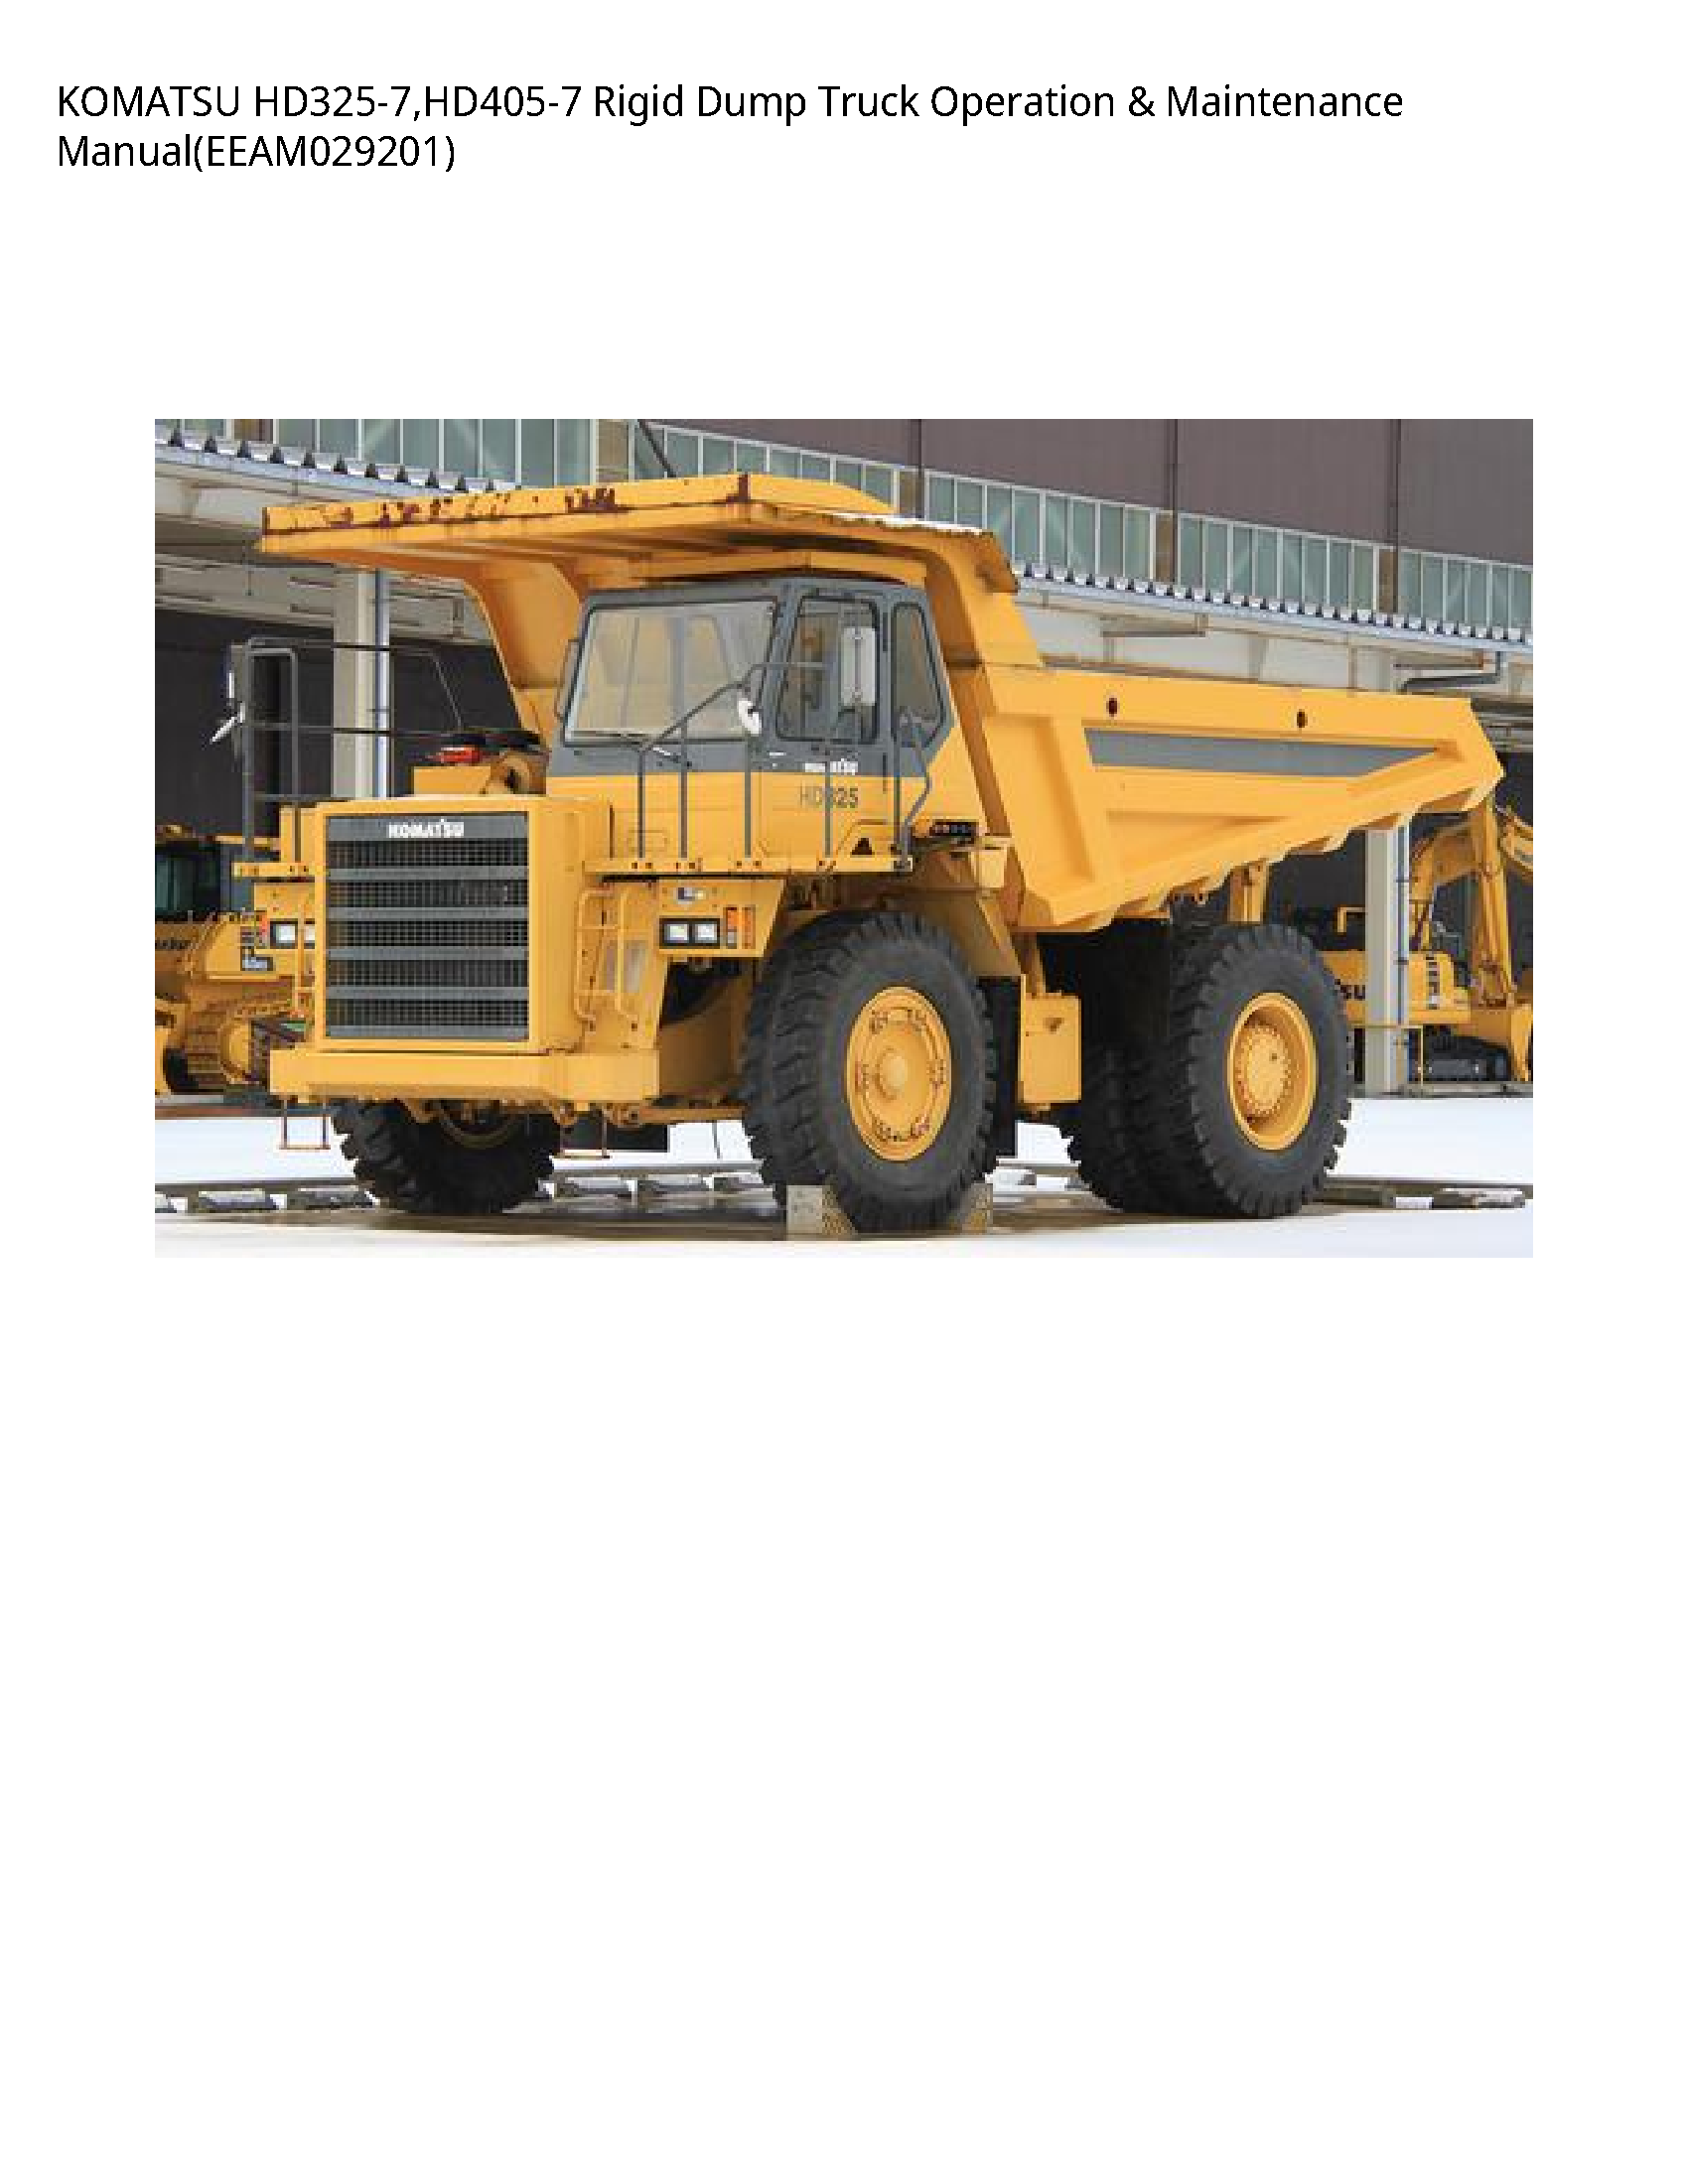 KOMATSU HD325-7 Rigid Dump Truck Operation Maintenance manual